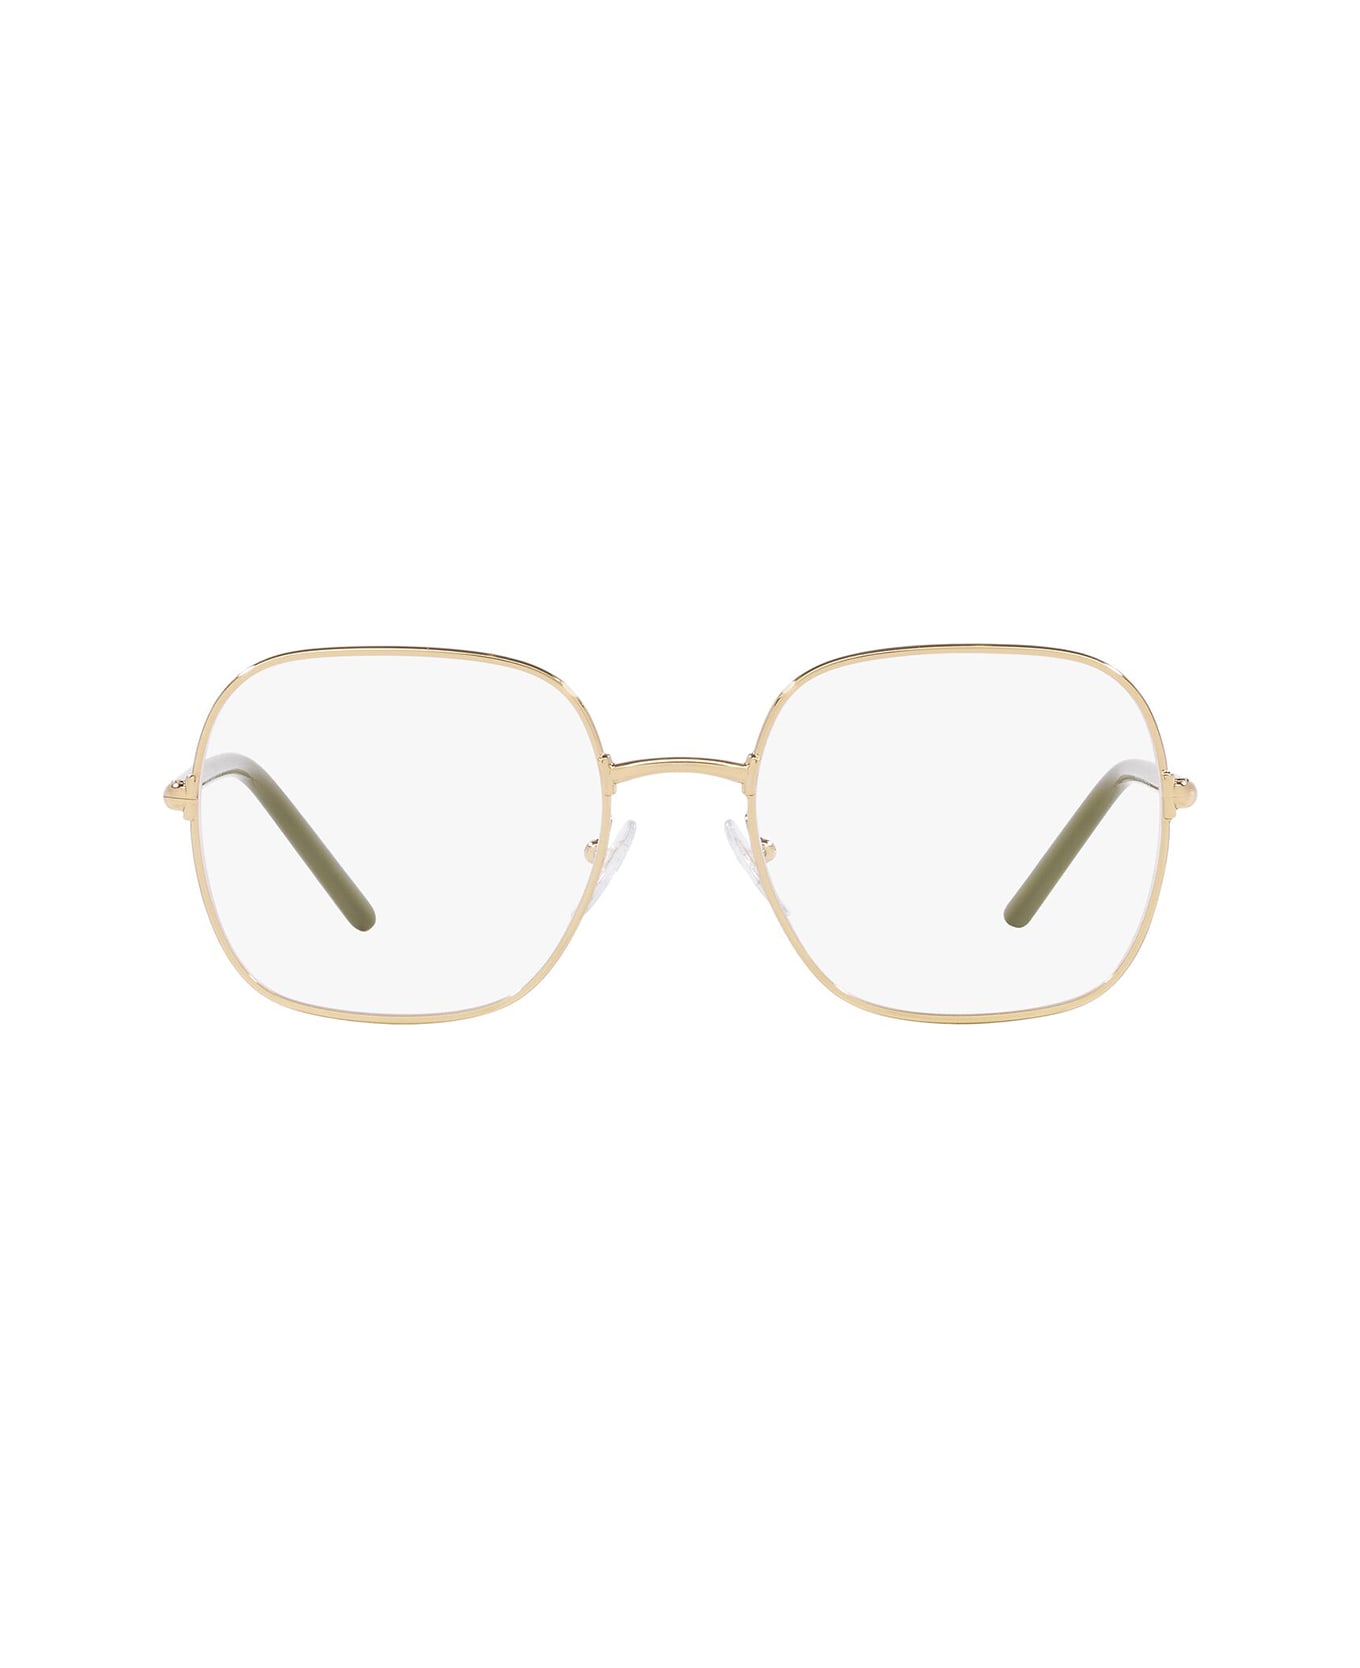 Prada Eyewear Pr 56wv Pale Gold Glasses - Pale Gold